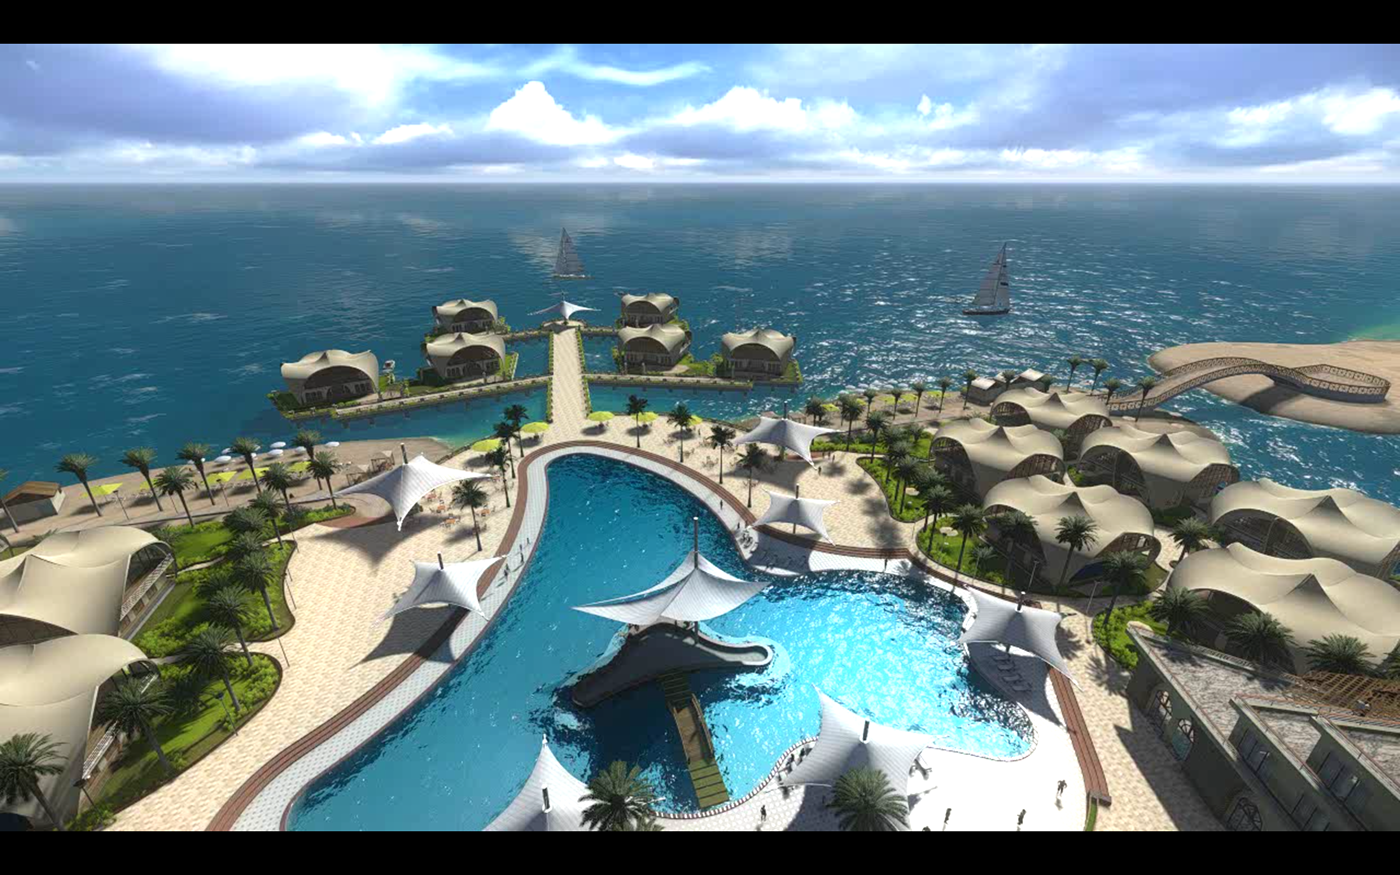 architecture Landscape animation  Advertising  beach resort